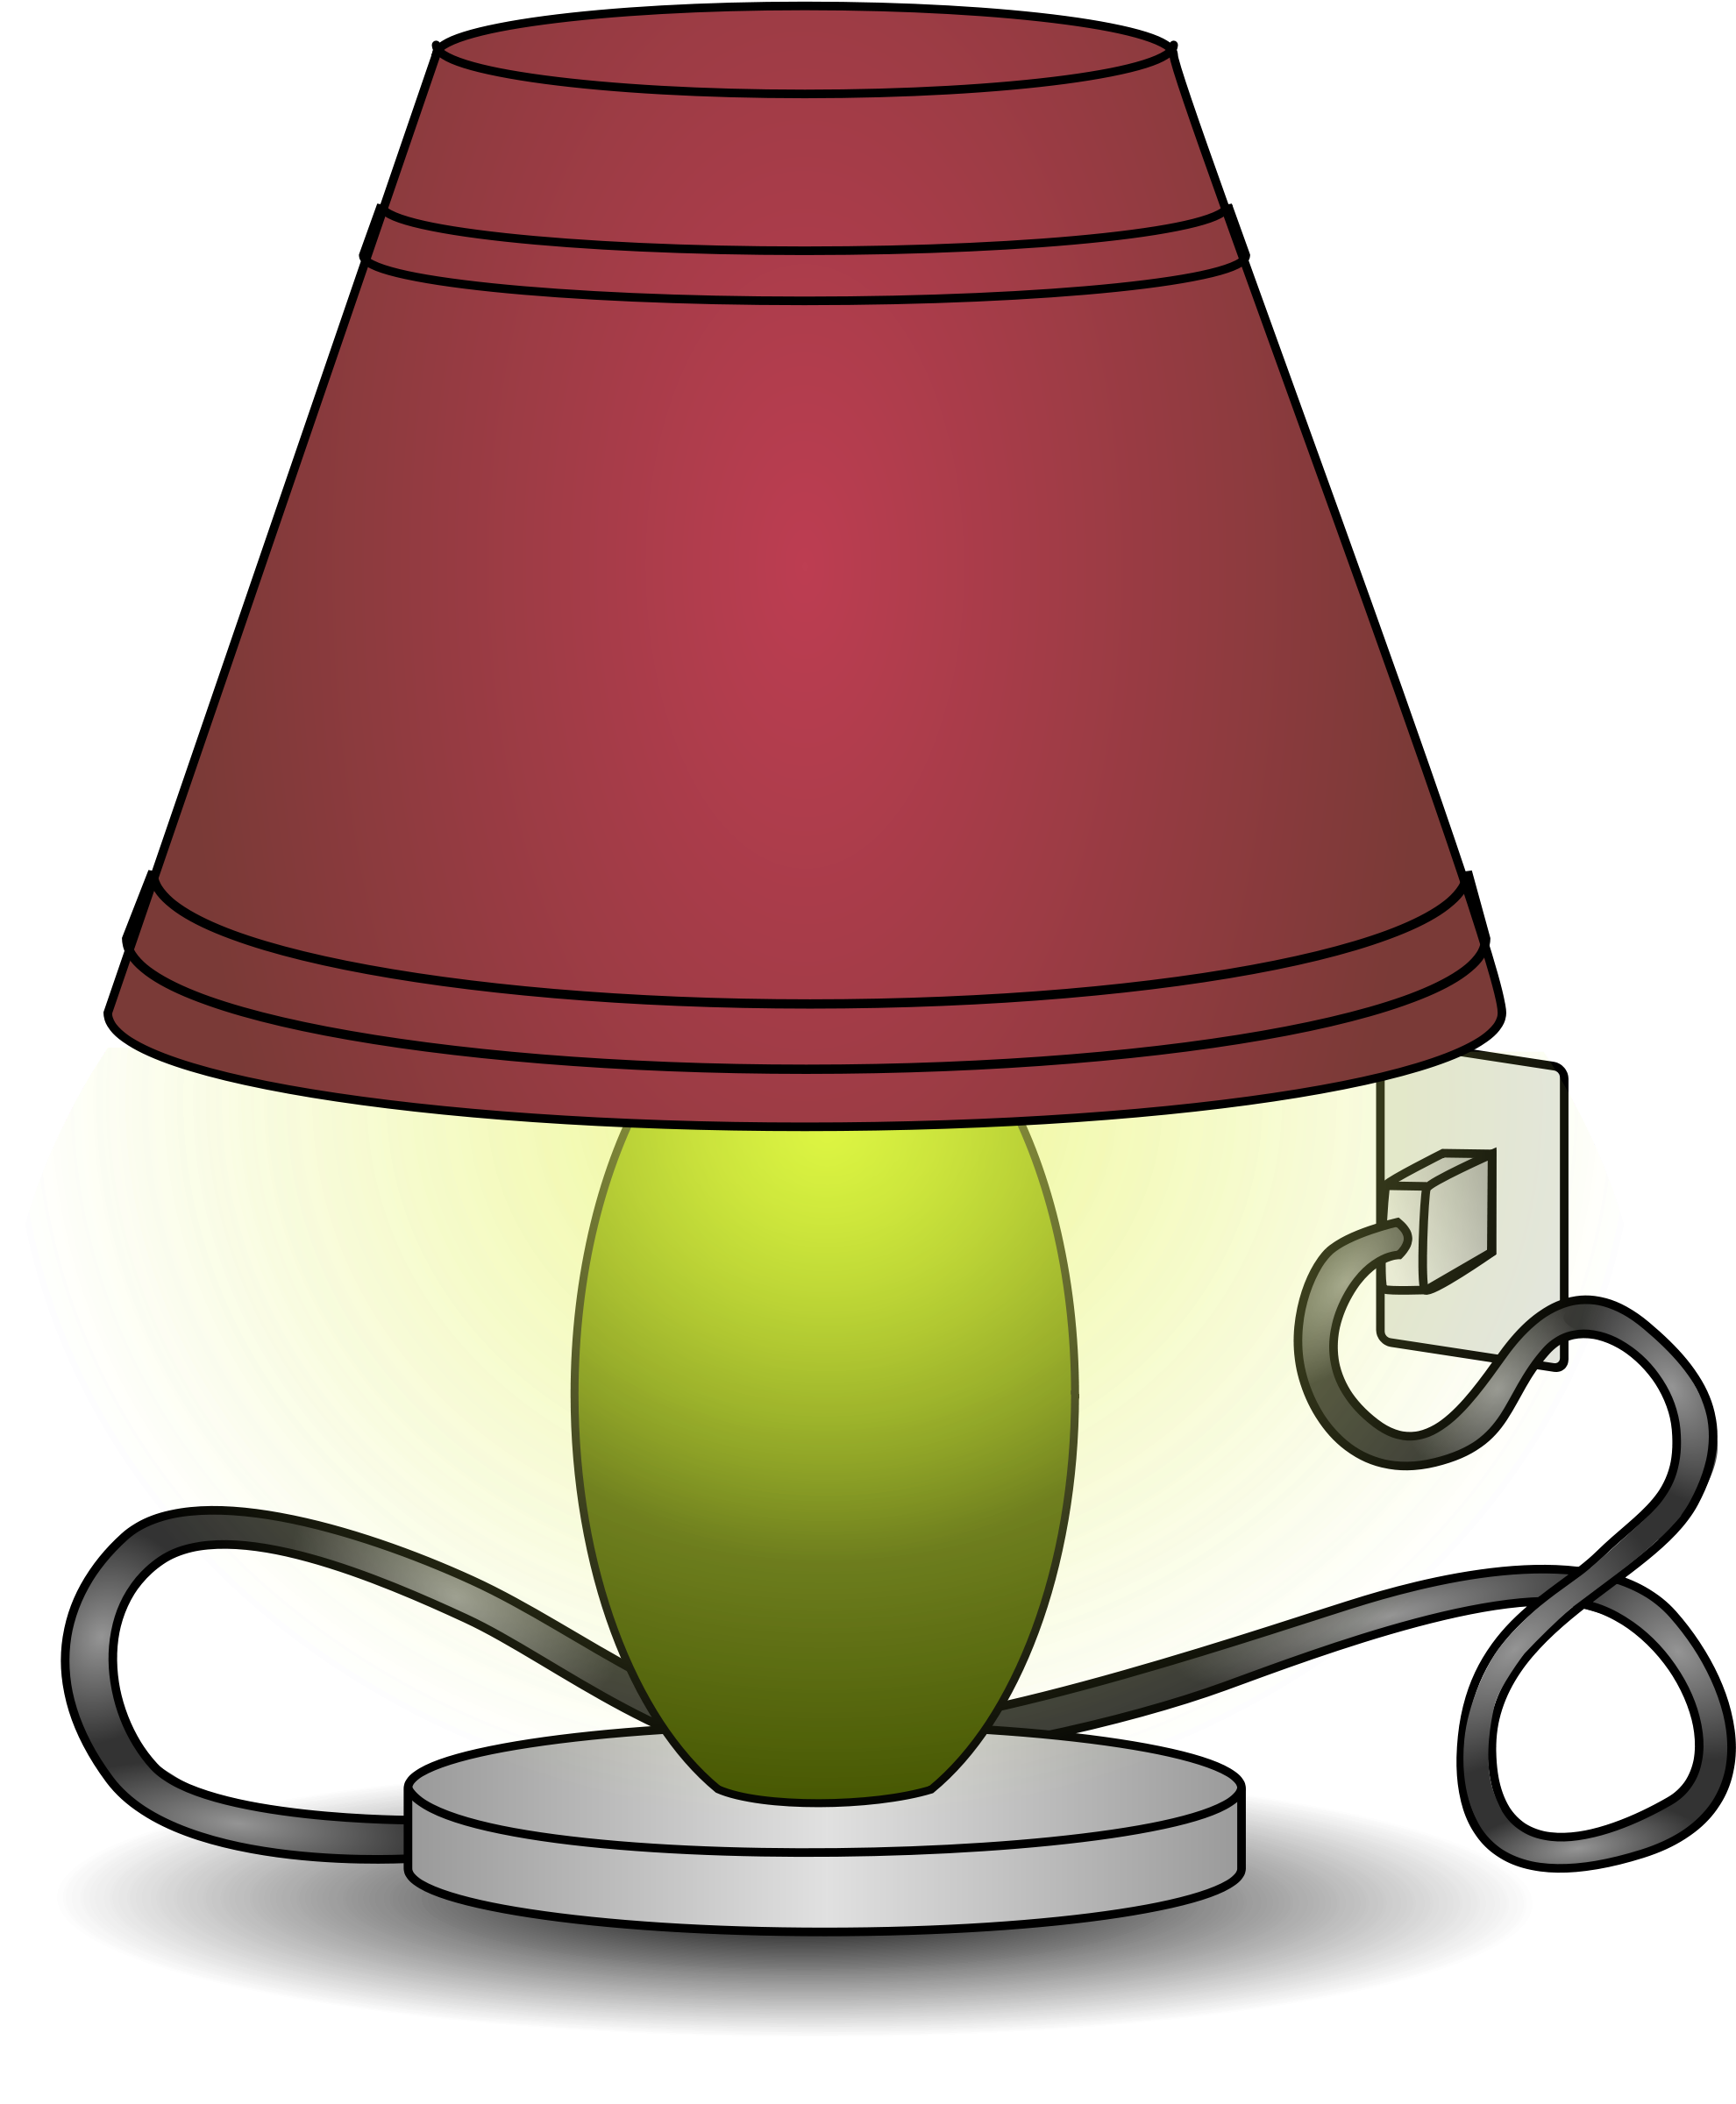 lamp clipart - Lamp Clip Art